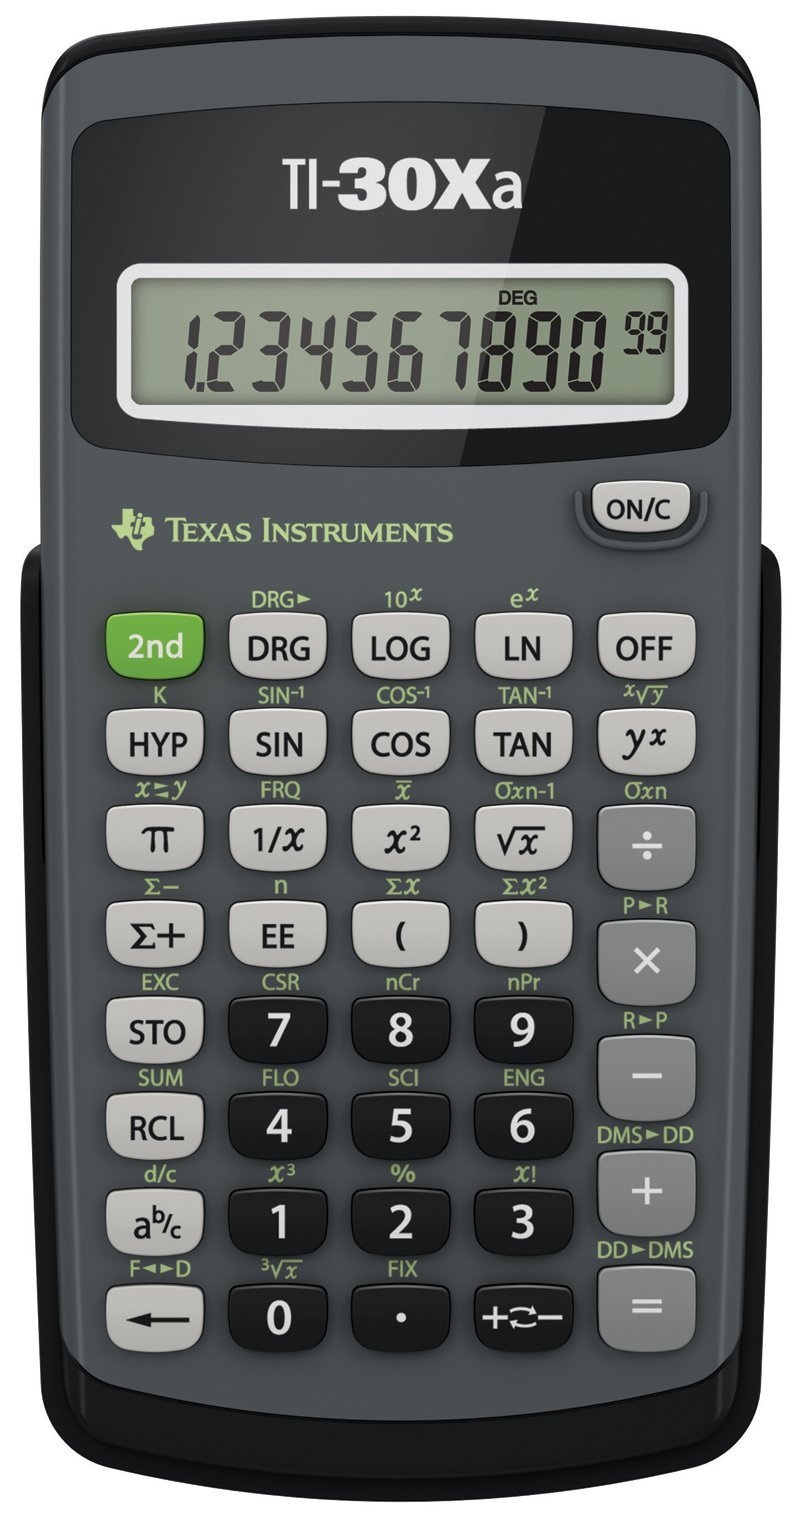  [AUSTRALIA] - Texas Instruments TI-30Xa Scientific Calculator Gray